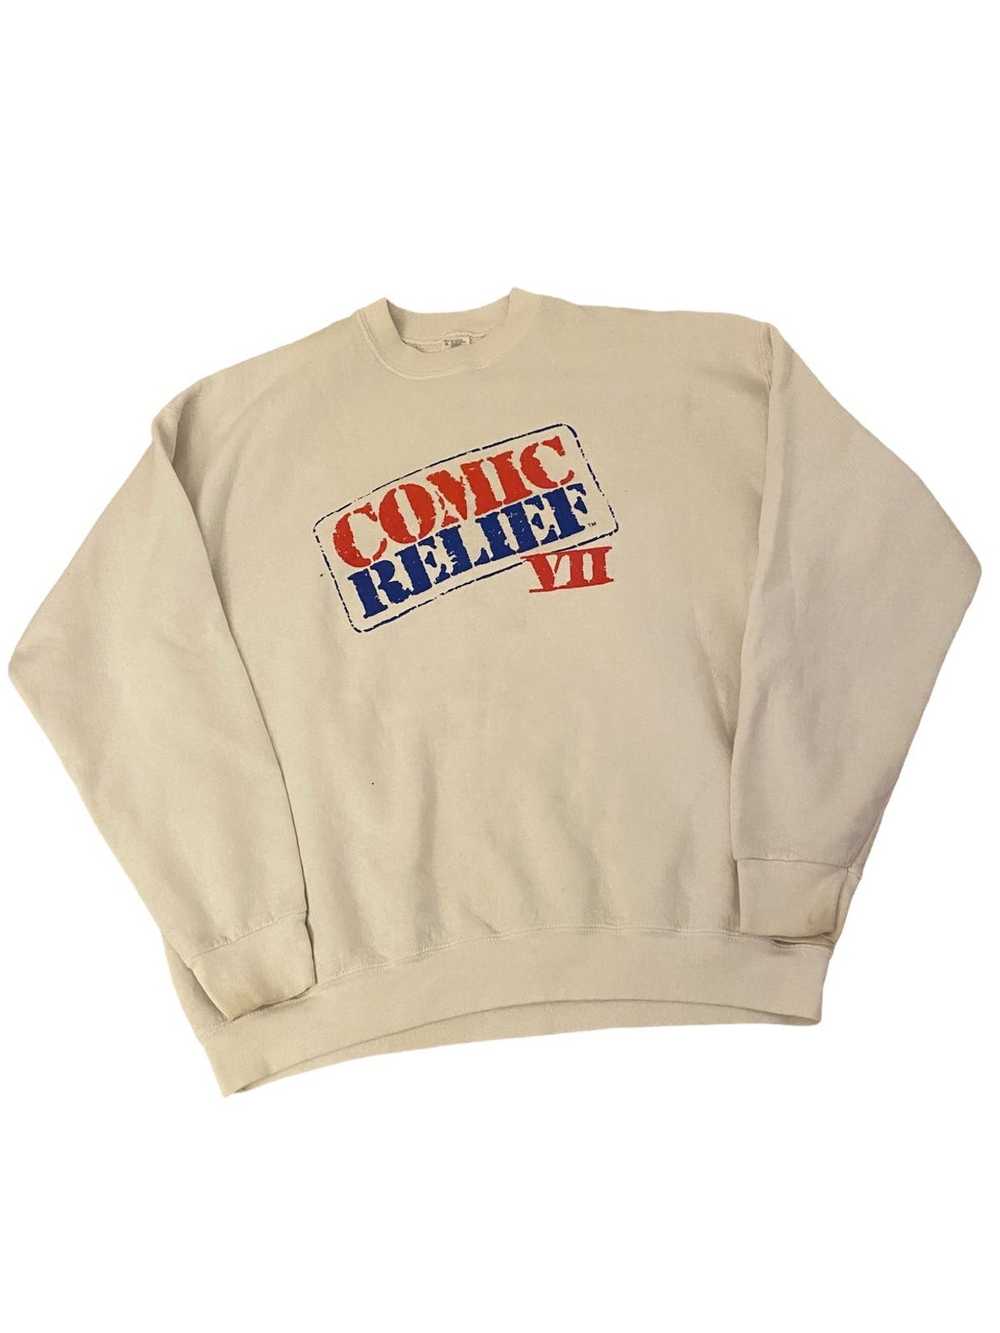 Vintage Vintage Comic Relief Sweatshirt Promo - image 1